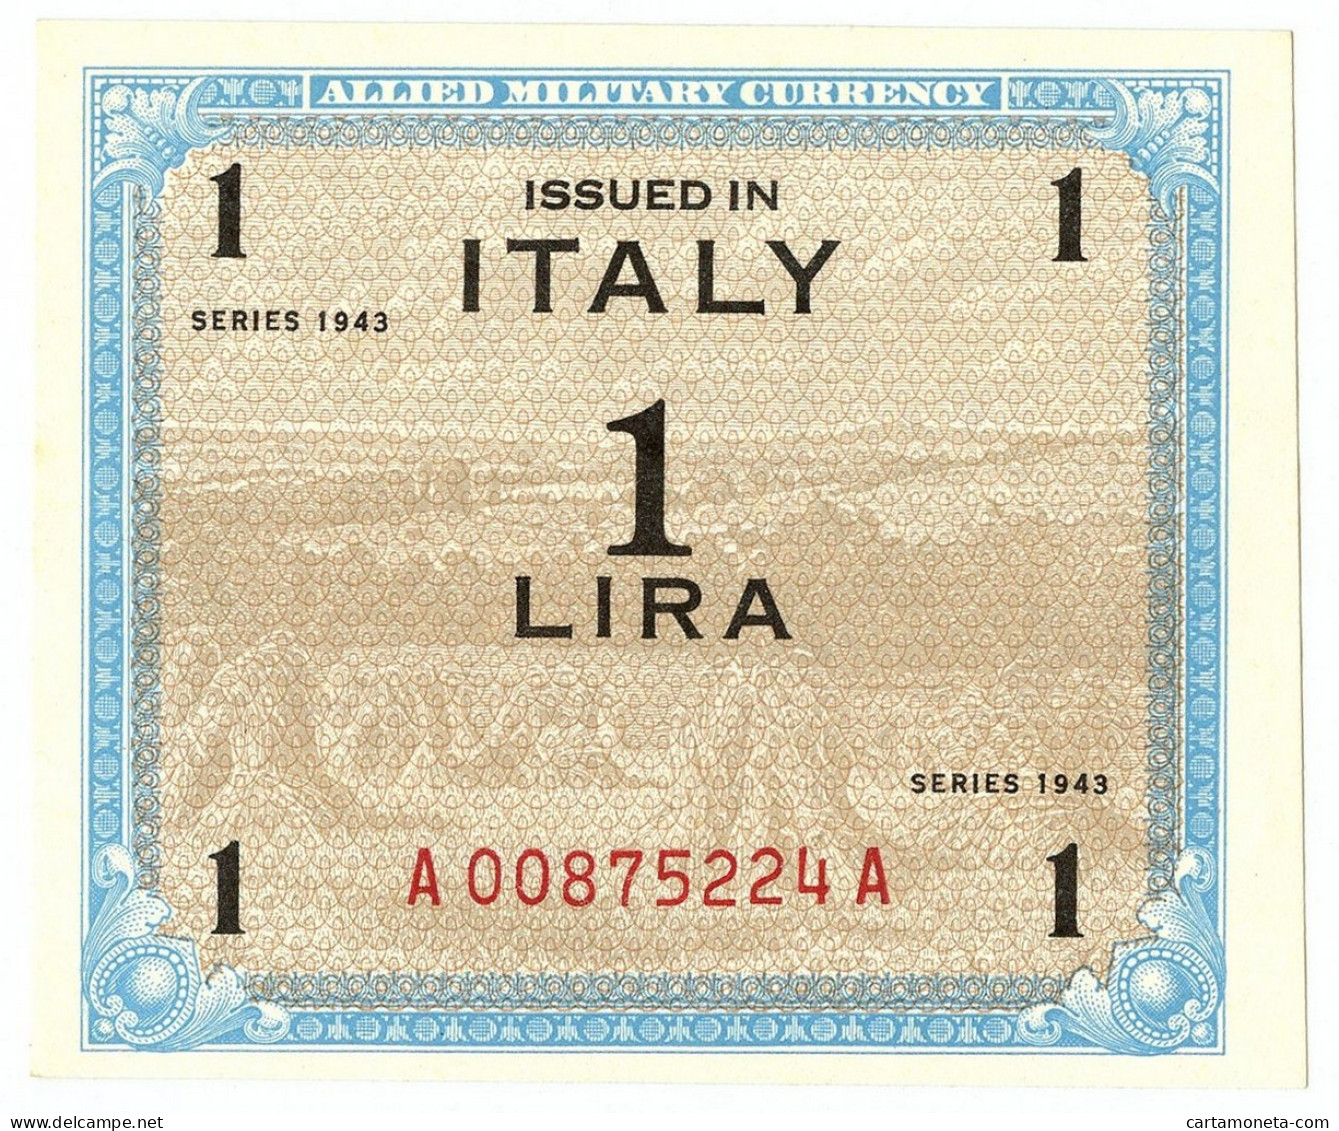 1 LIRA OCCUPAZIONE AMERICANA IN ITALIA MONOLINGUA BEP 1943 QFDS - Ocupación Aliados Segunda Guerra Mundial